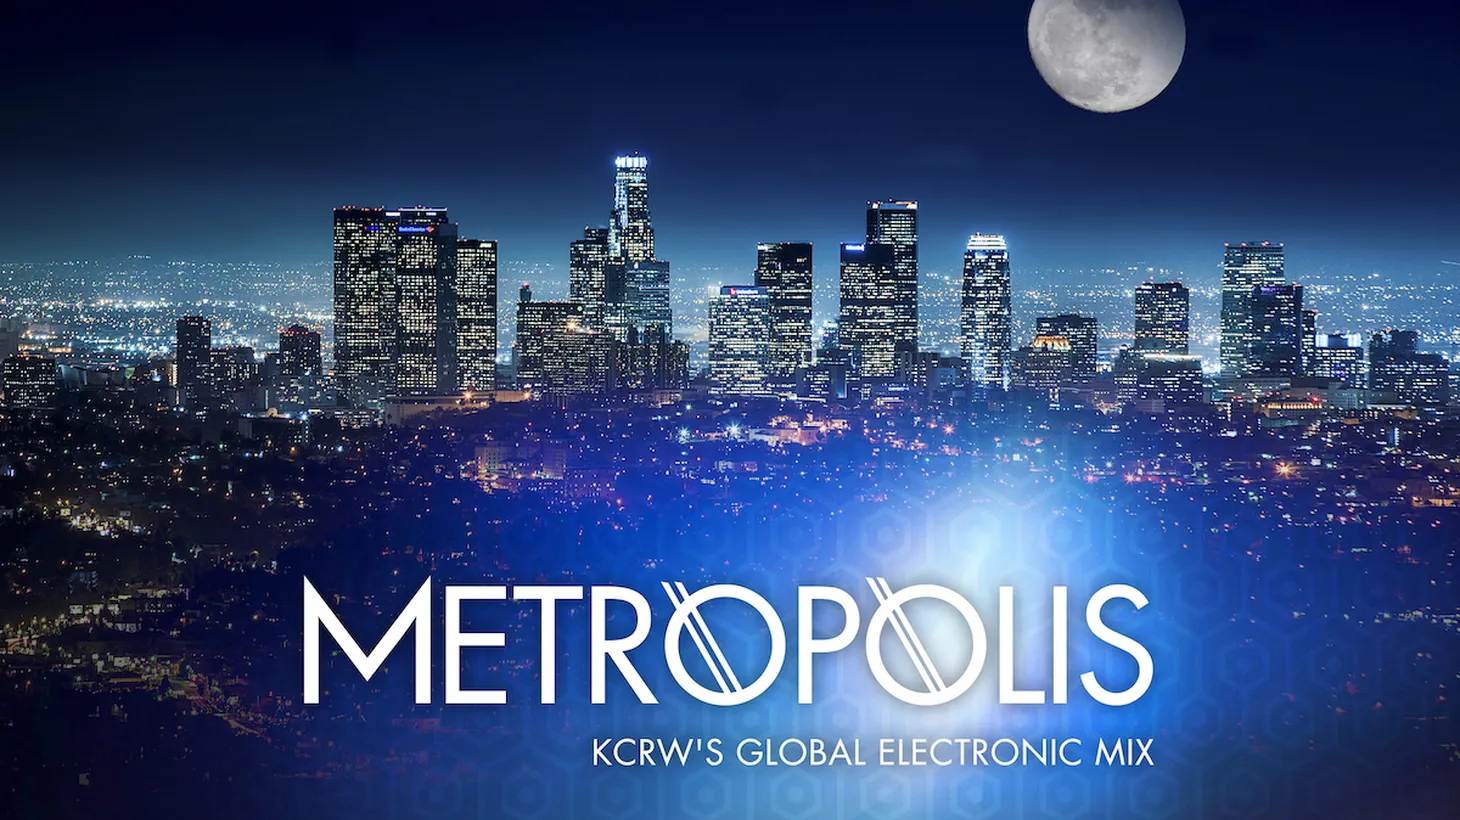 Metropolis playlist, June 12, 2021.